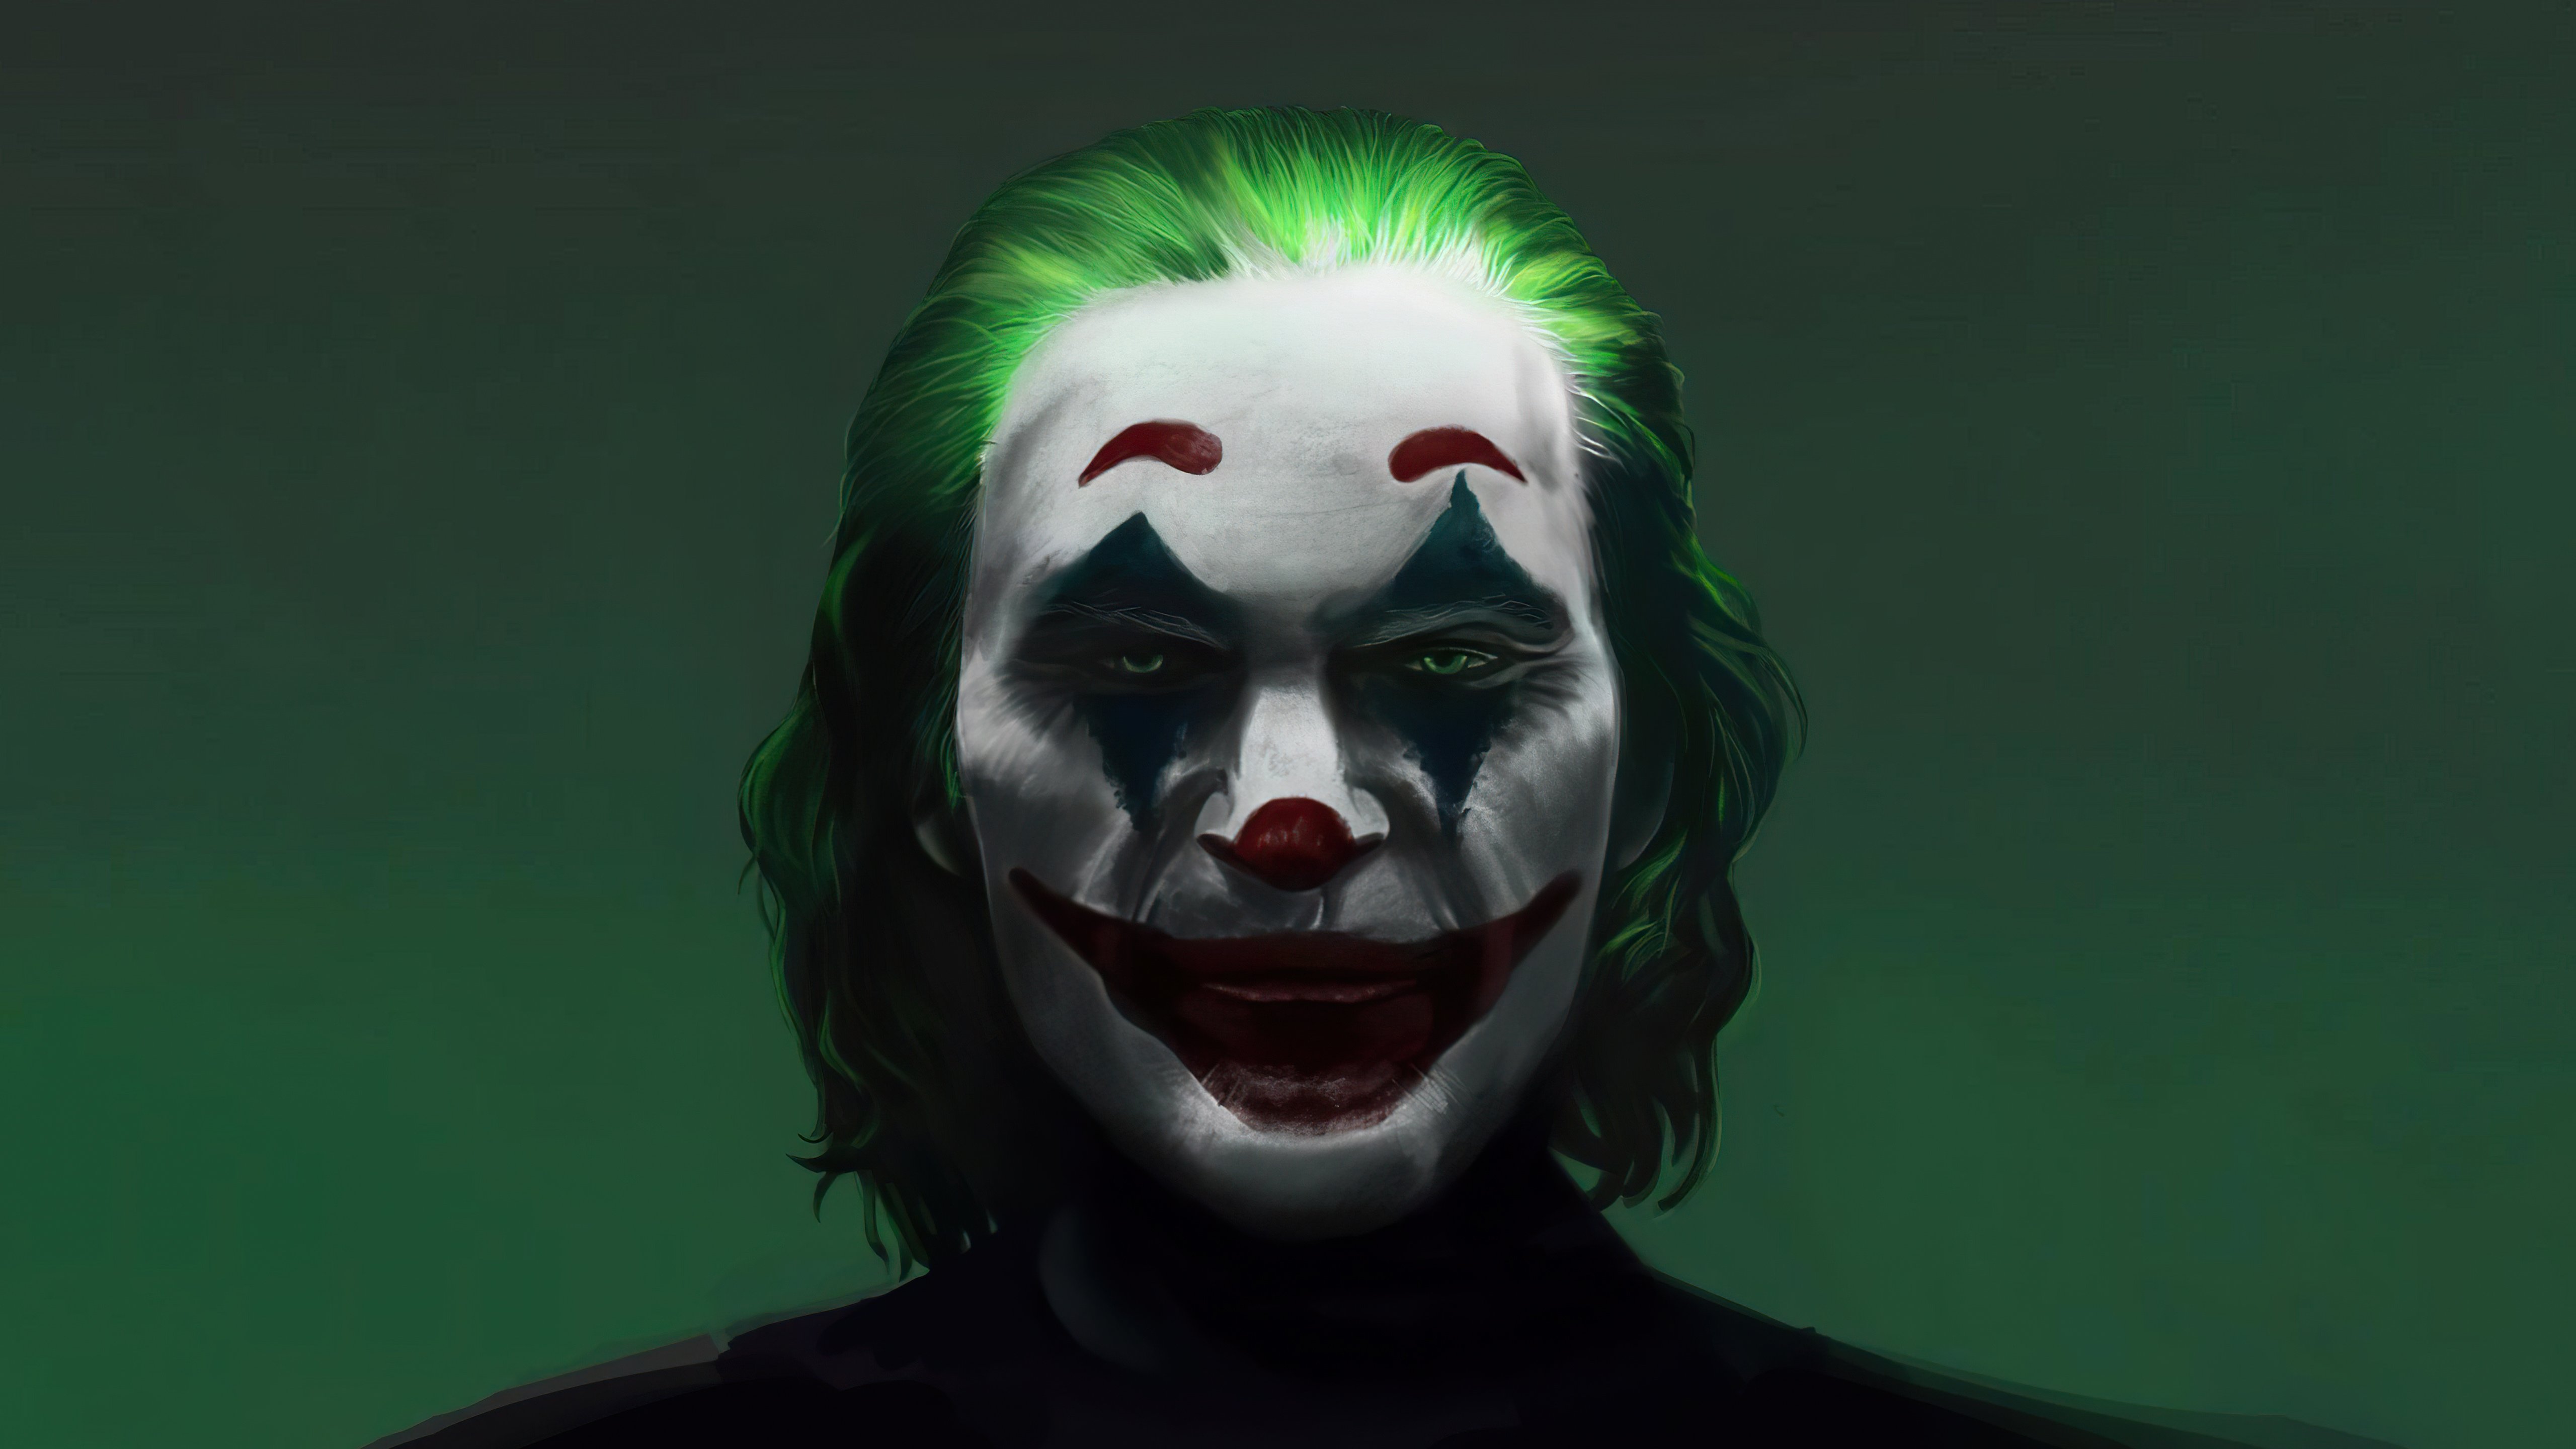 Wallpaper Joker's face in the shadows